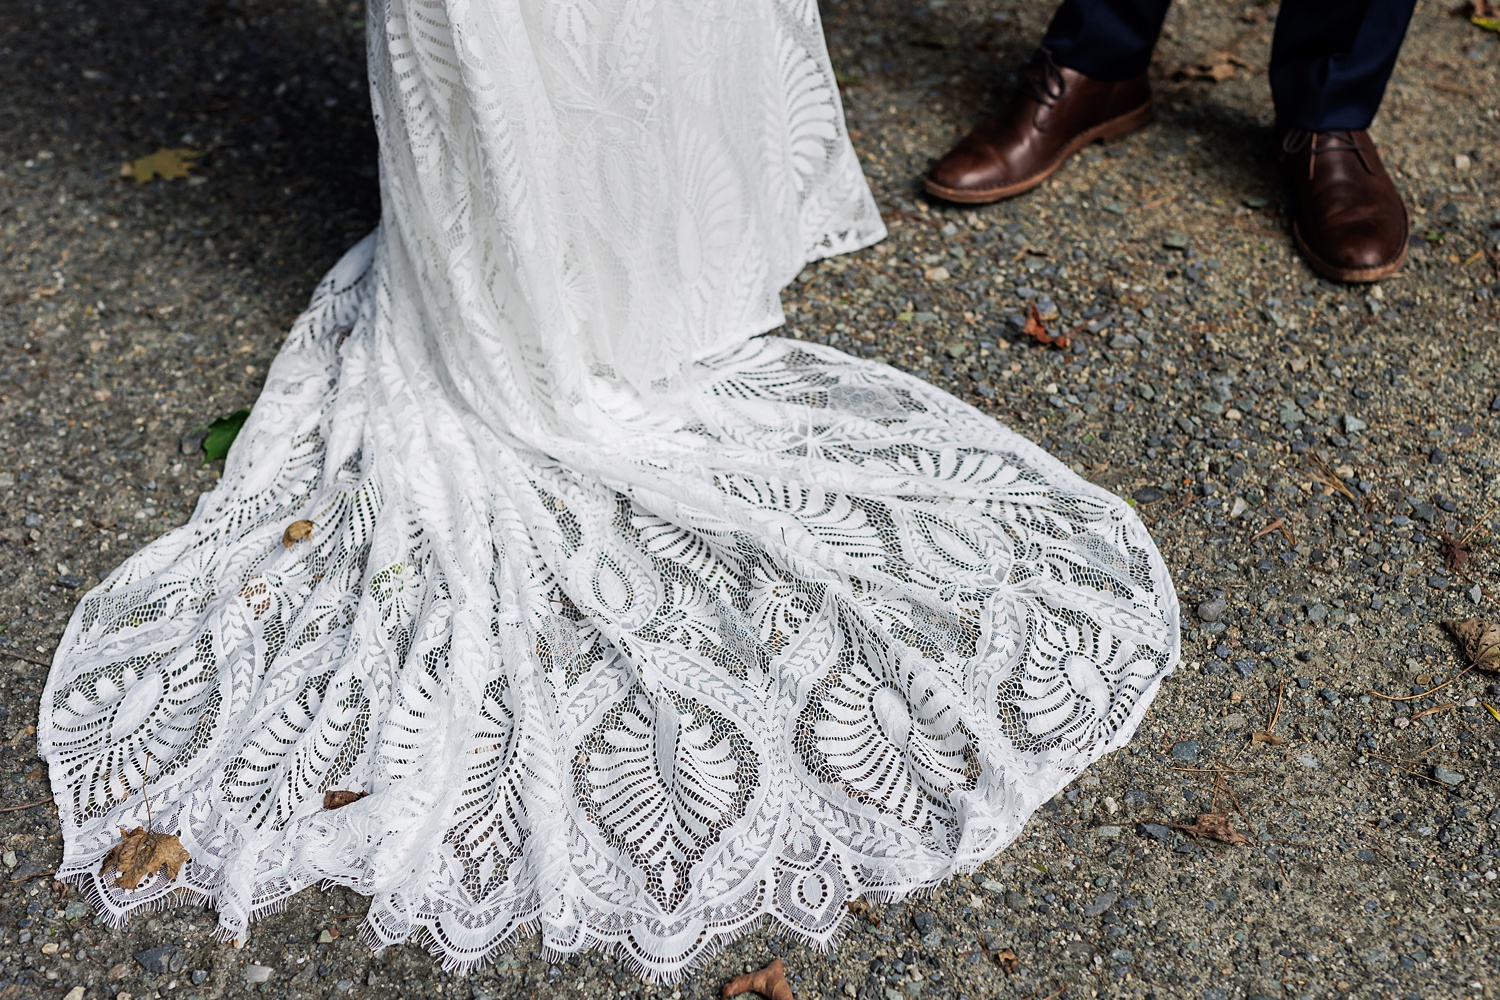 The bride's dress detail